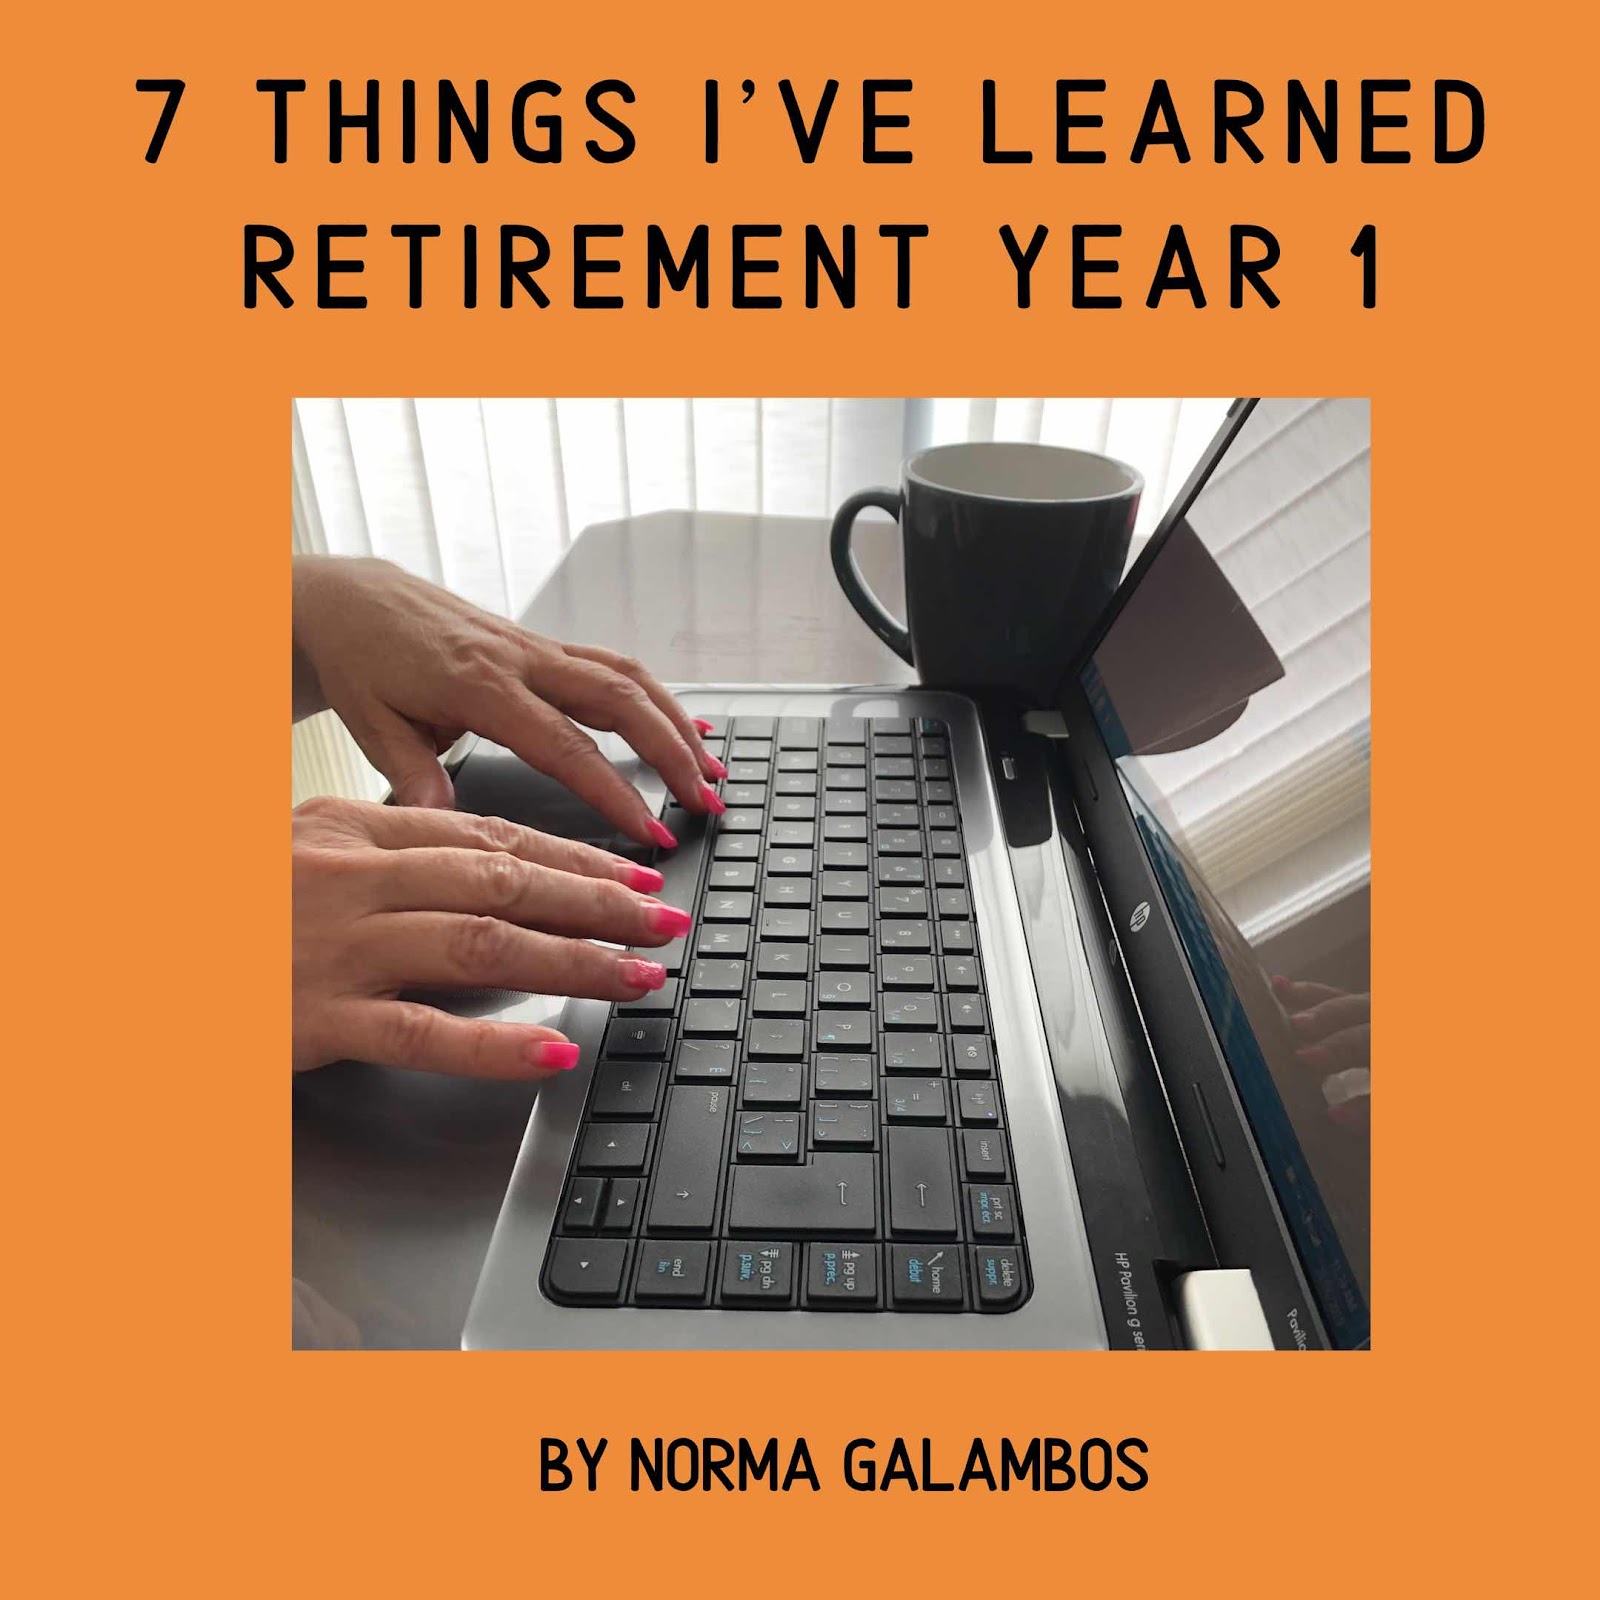 retirement tips